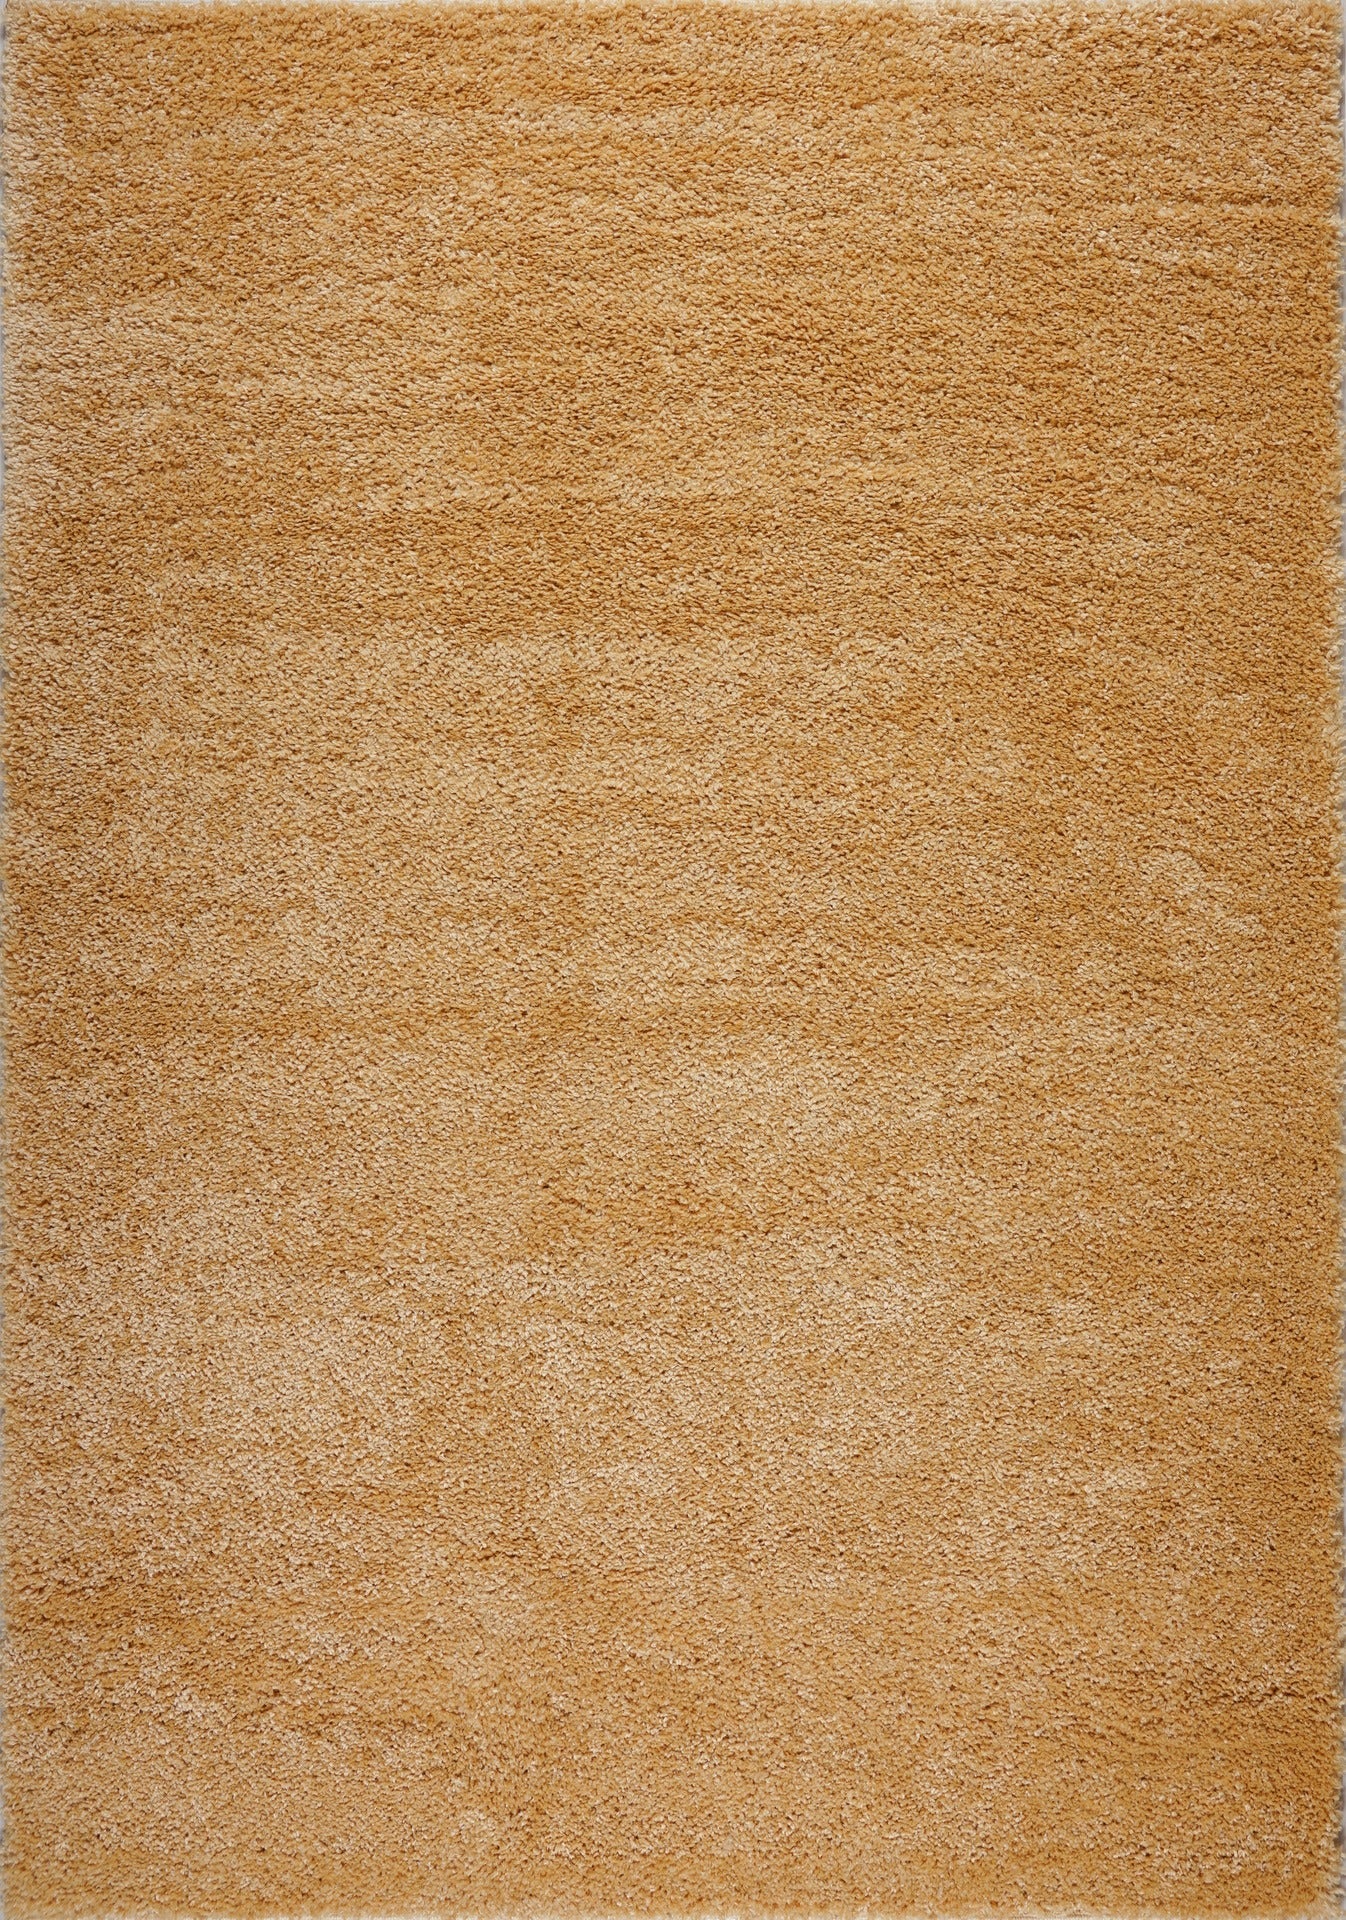 ladole rugs solid mustard yellow shaggy meknes durable medium pile indoor area rug carpet 8x11 710 x 105 240cm x 320cm 2x3 Doormat, Entrance, Balcony, Bathroom, Washroom